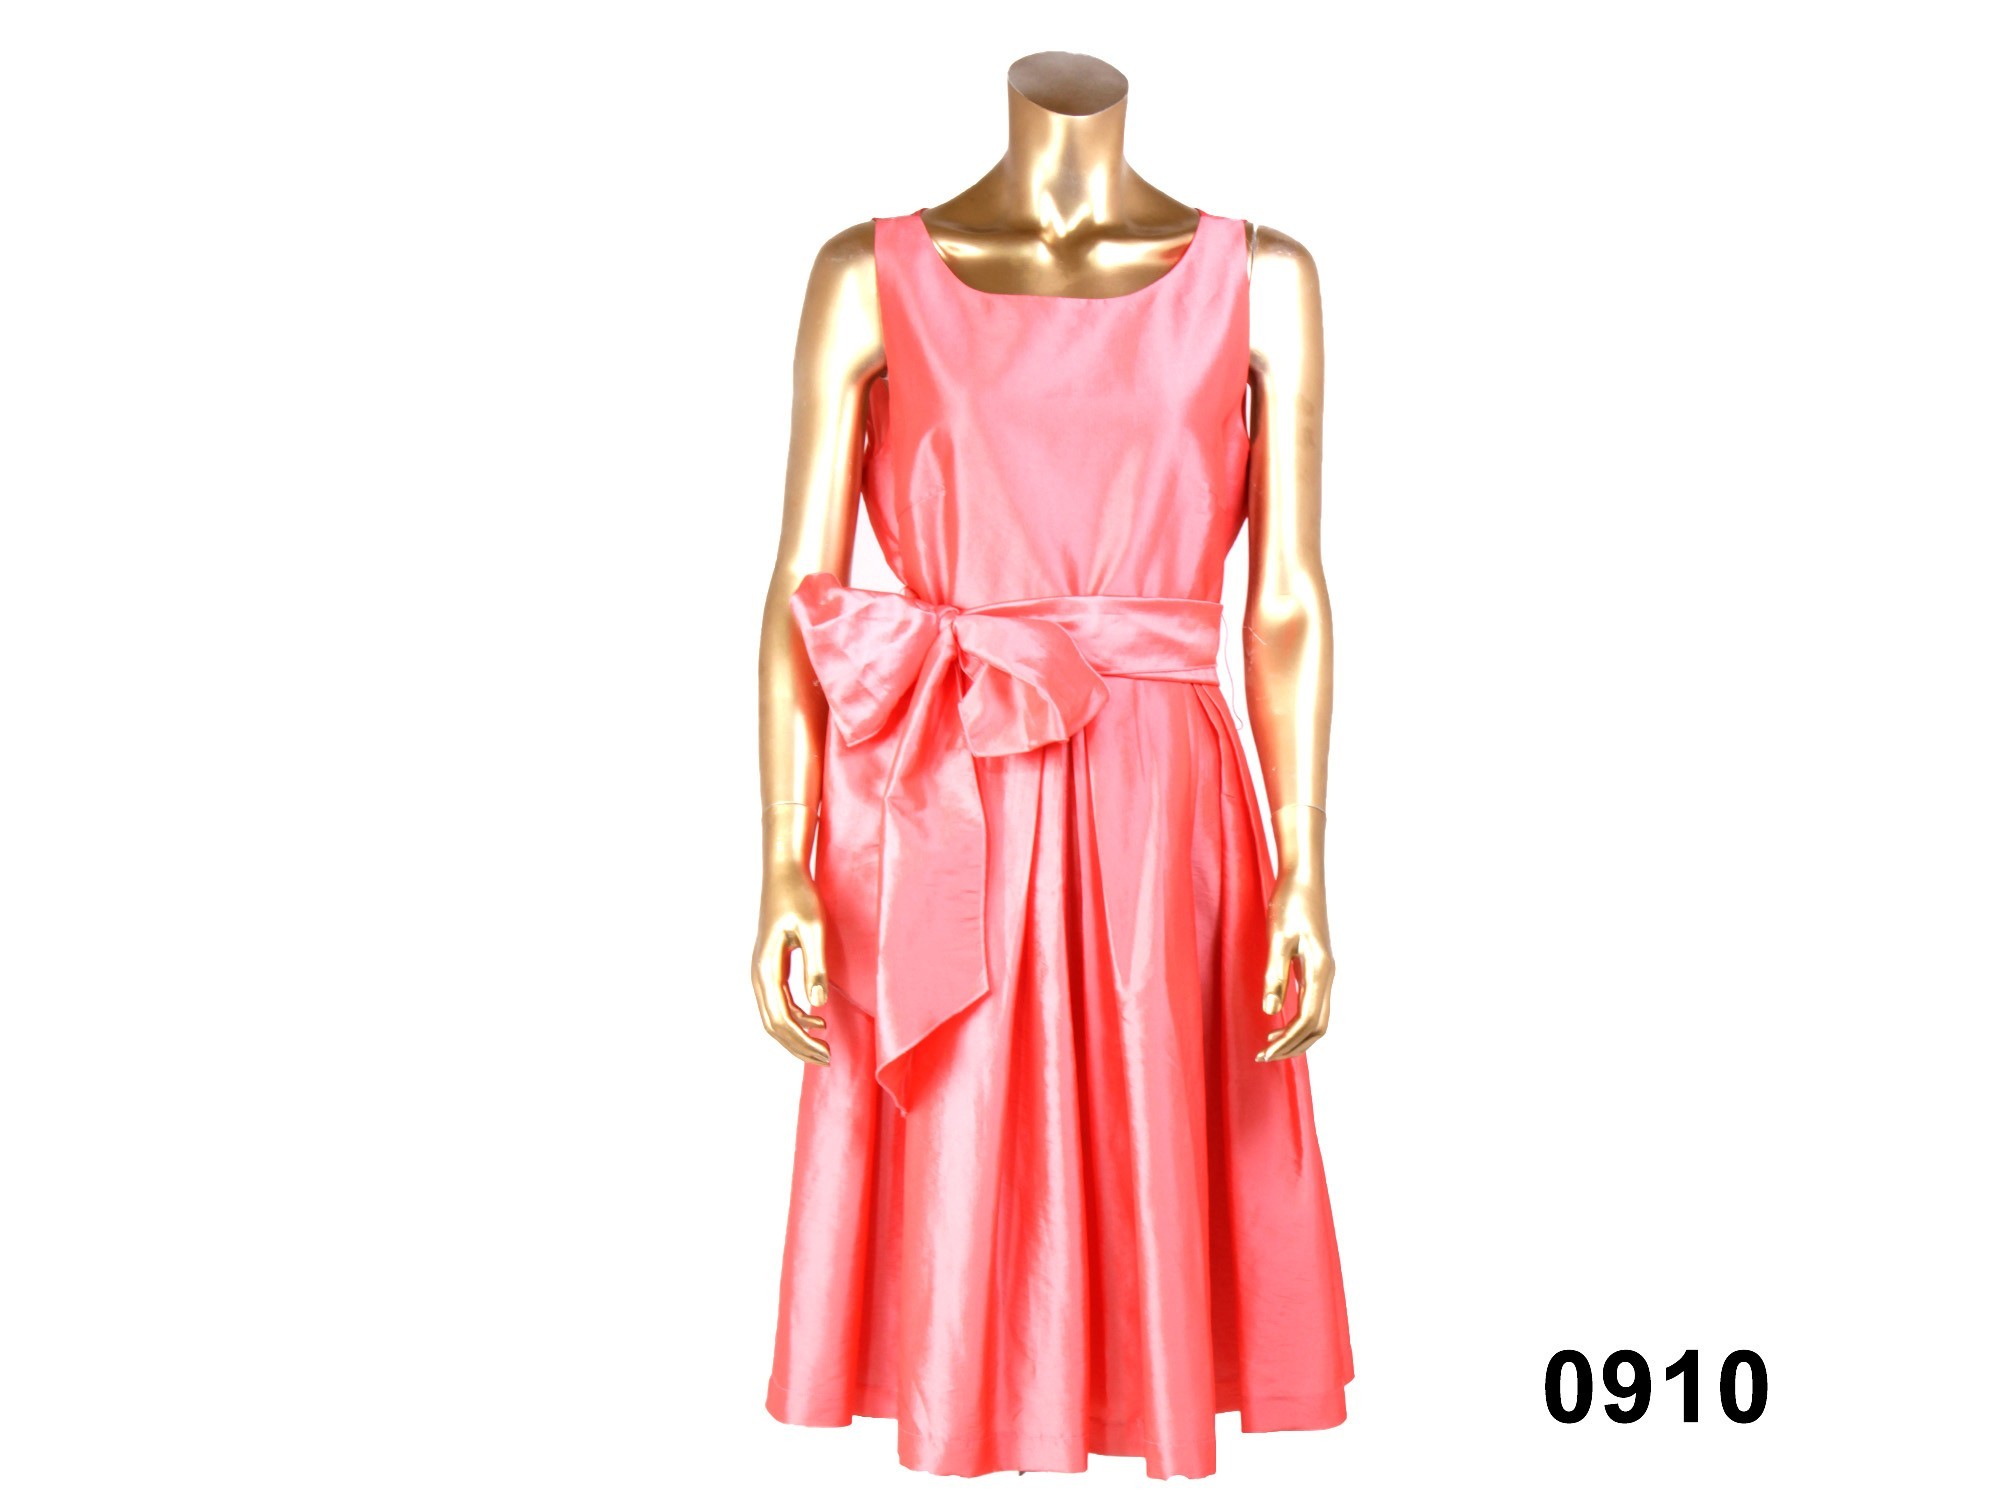 Salmon Pink Dress